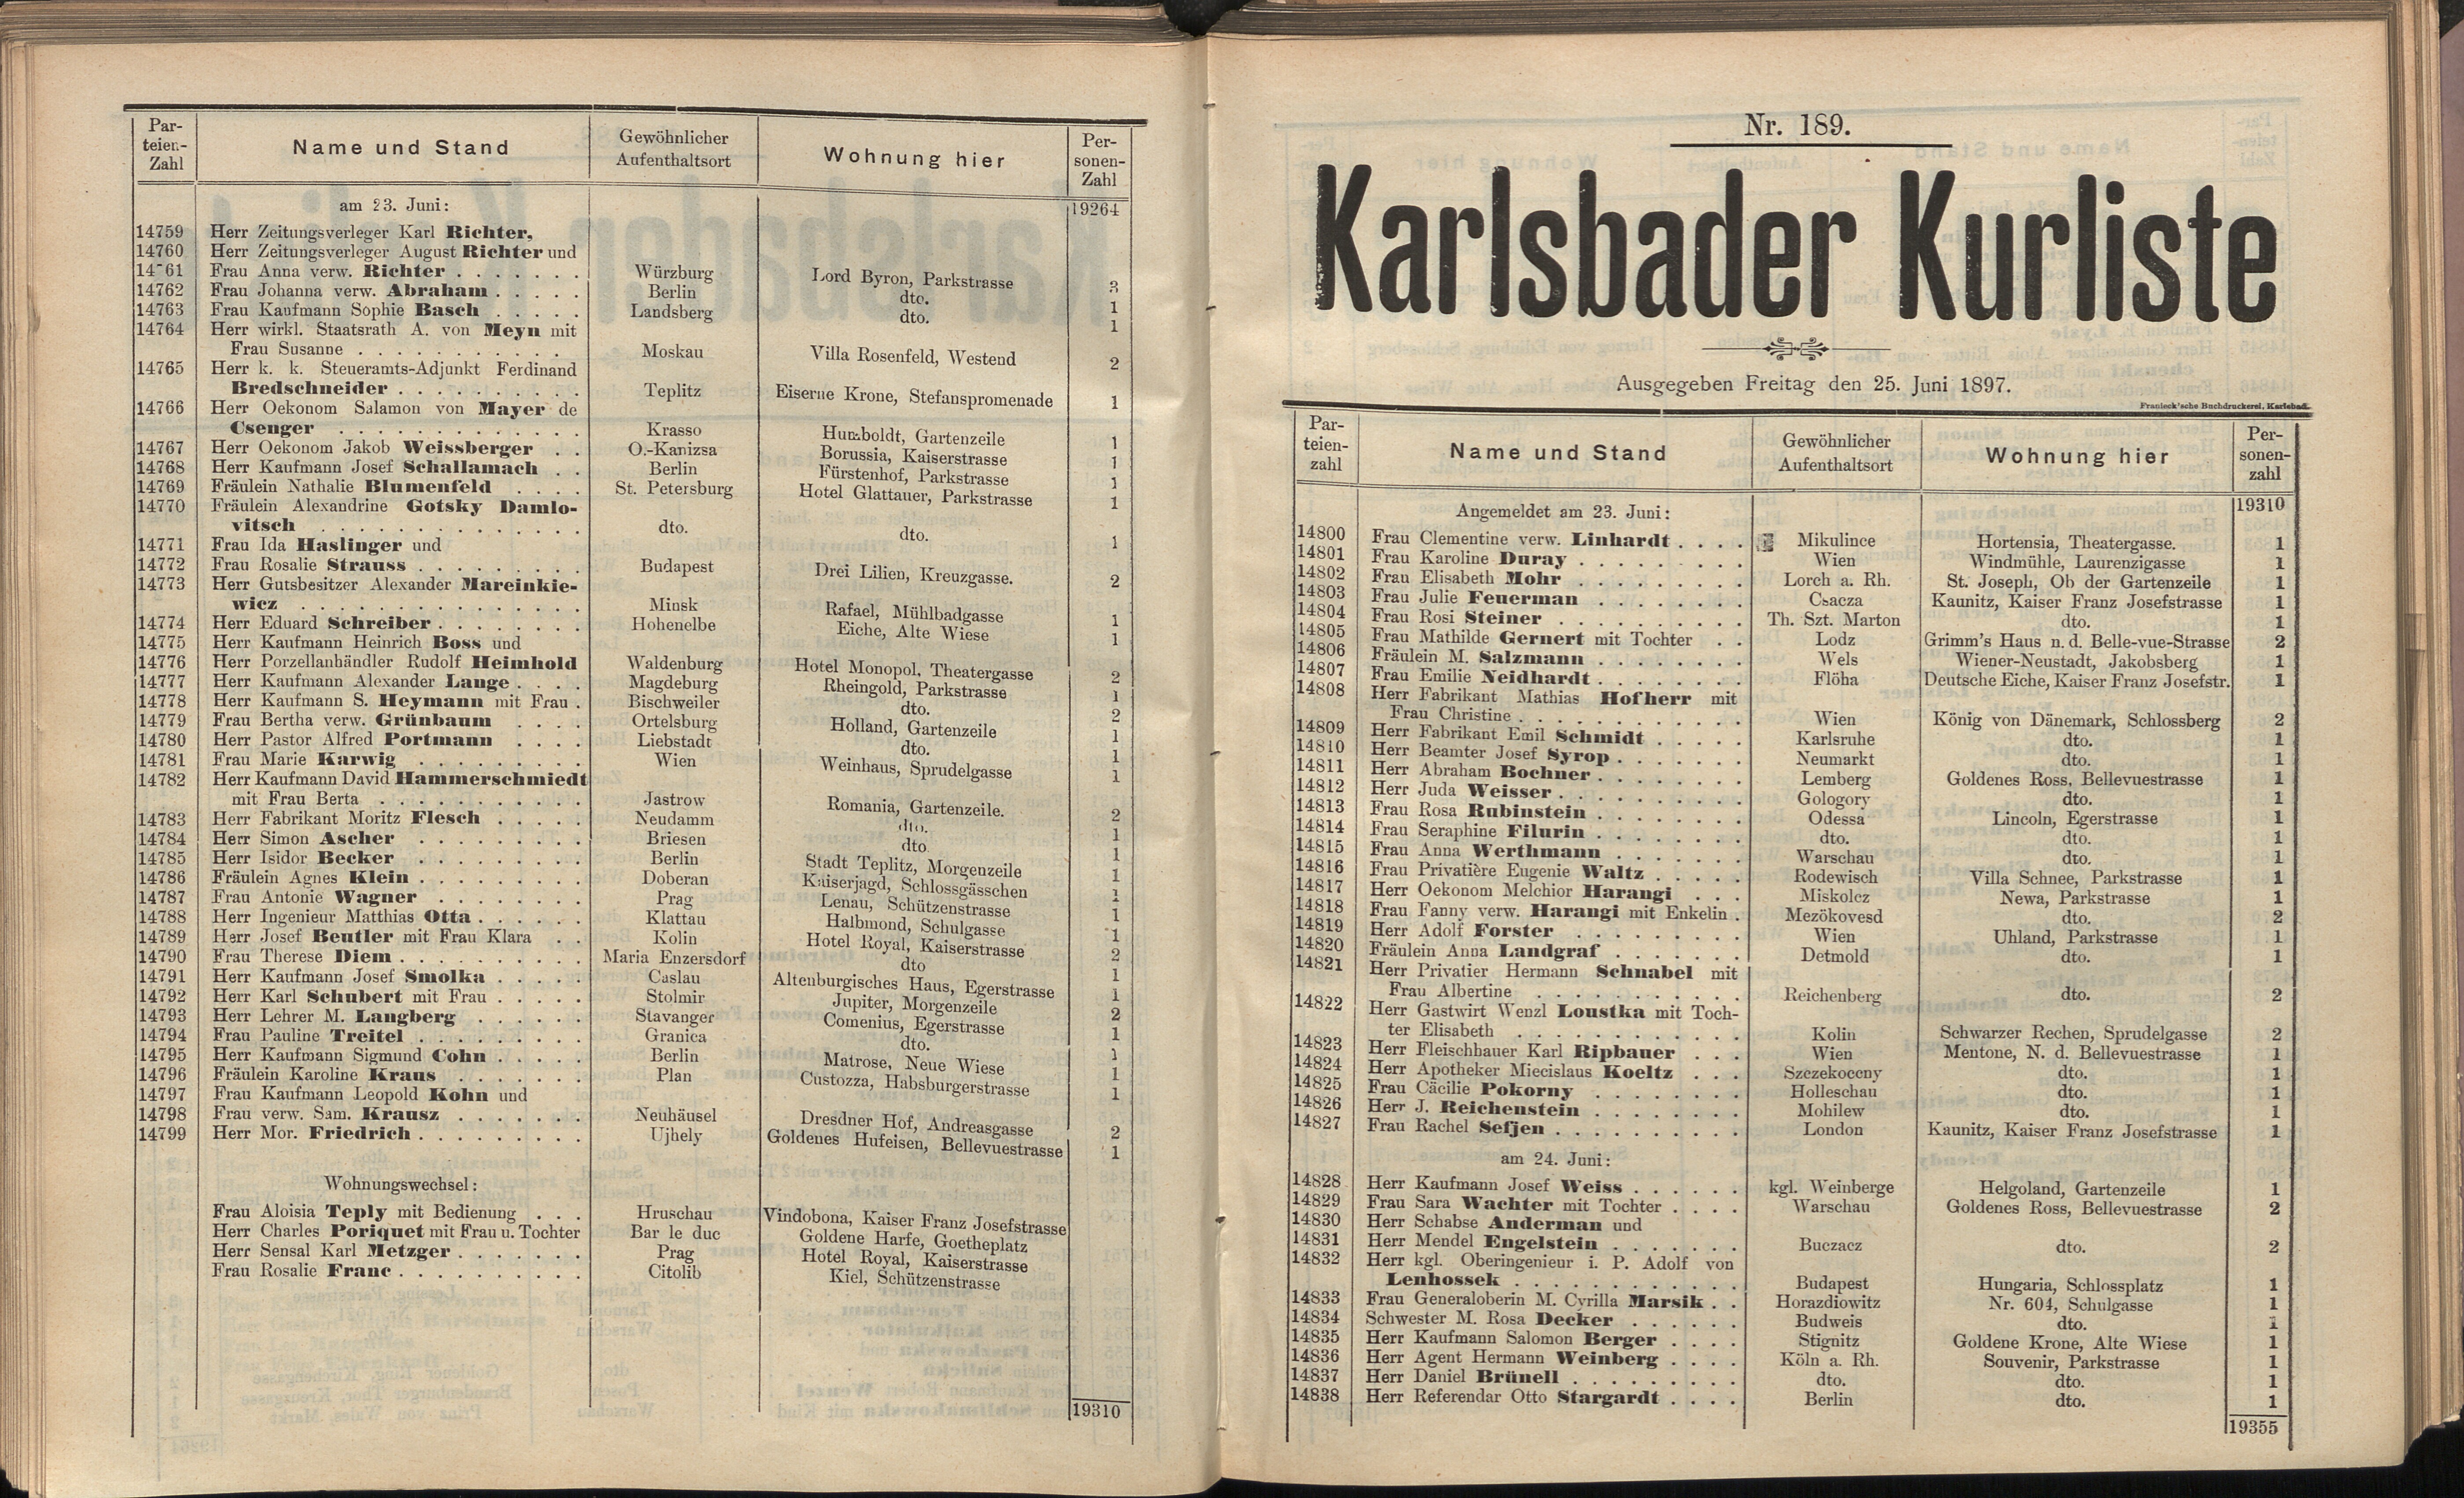 205. soap-kv_knihovna_karlsbader-kurliste-1897_2060